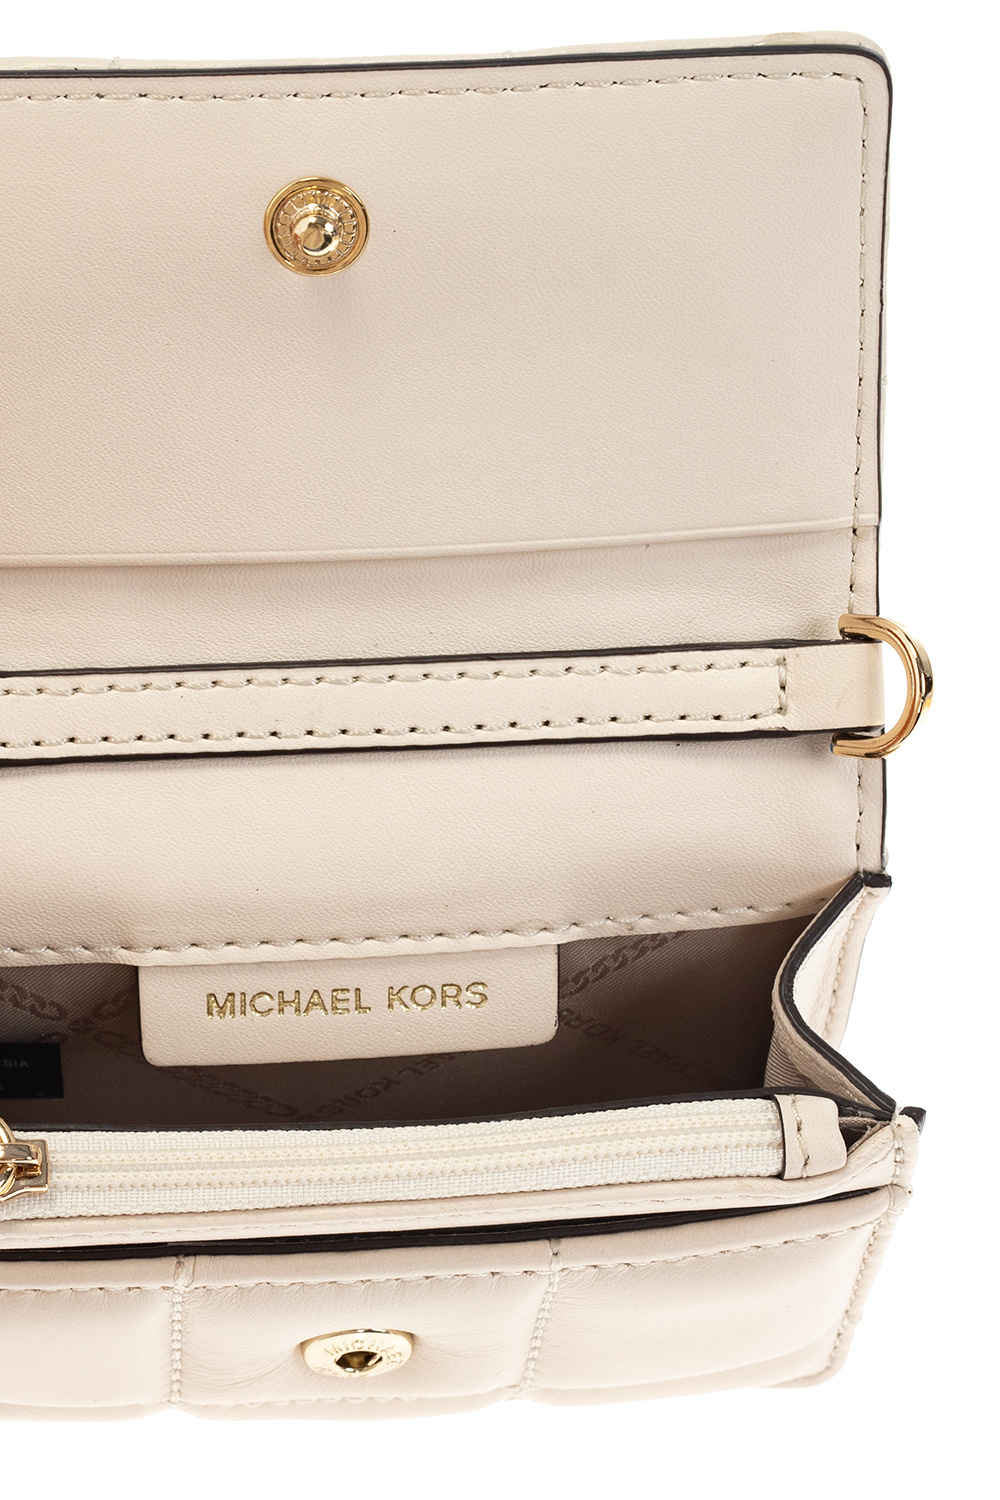 Michael Kors Women's Clutch Bags - Cream